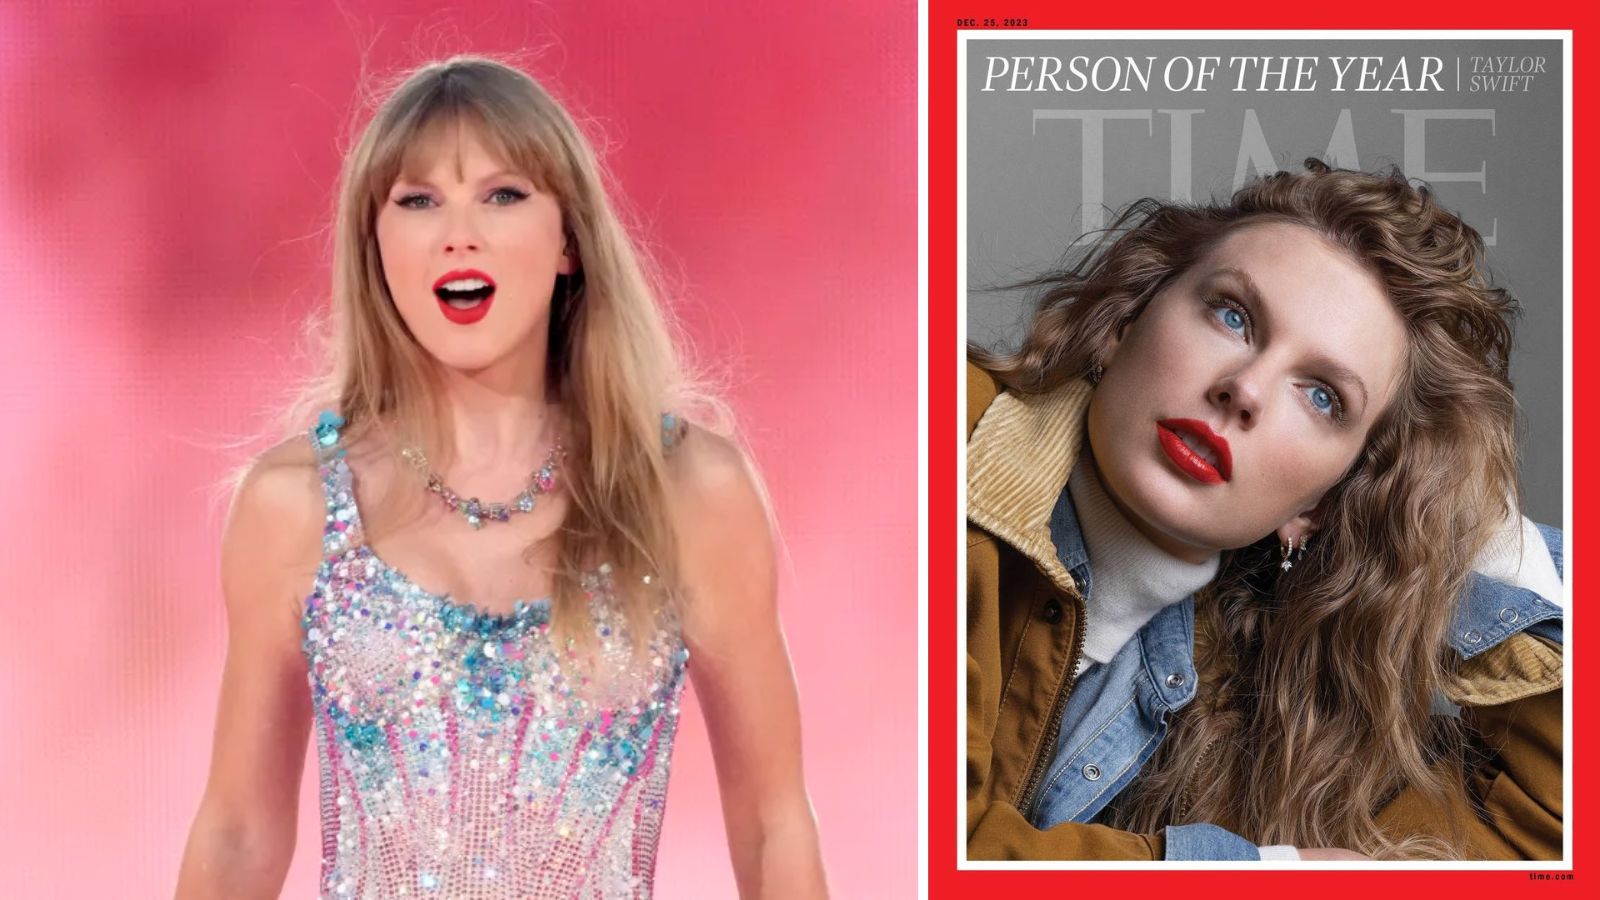 Revista Time nombra a Taylor Swift ‘La persona del año’